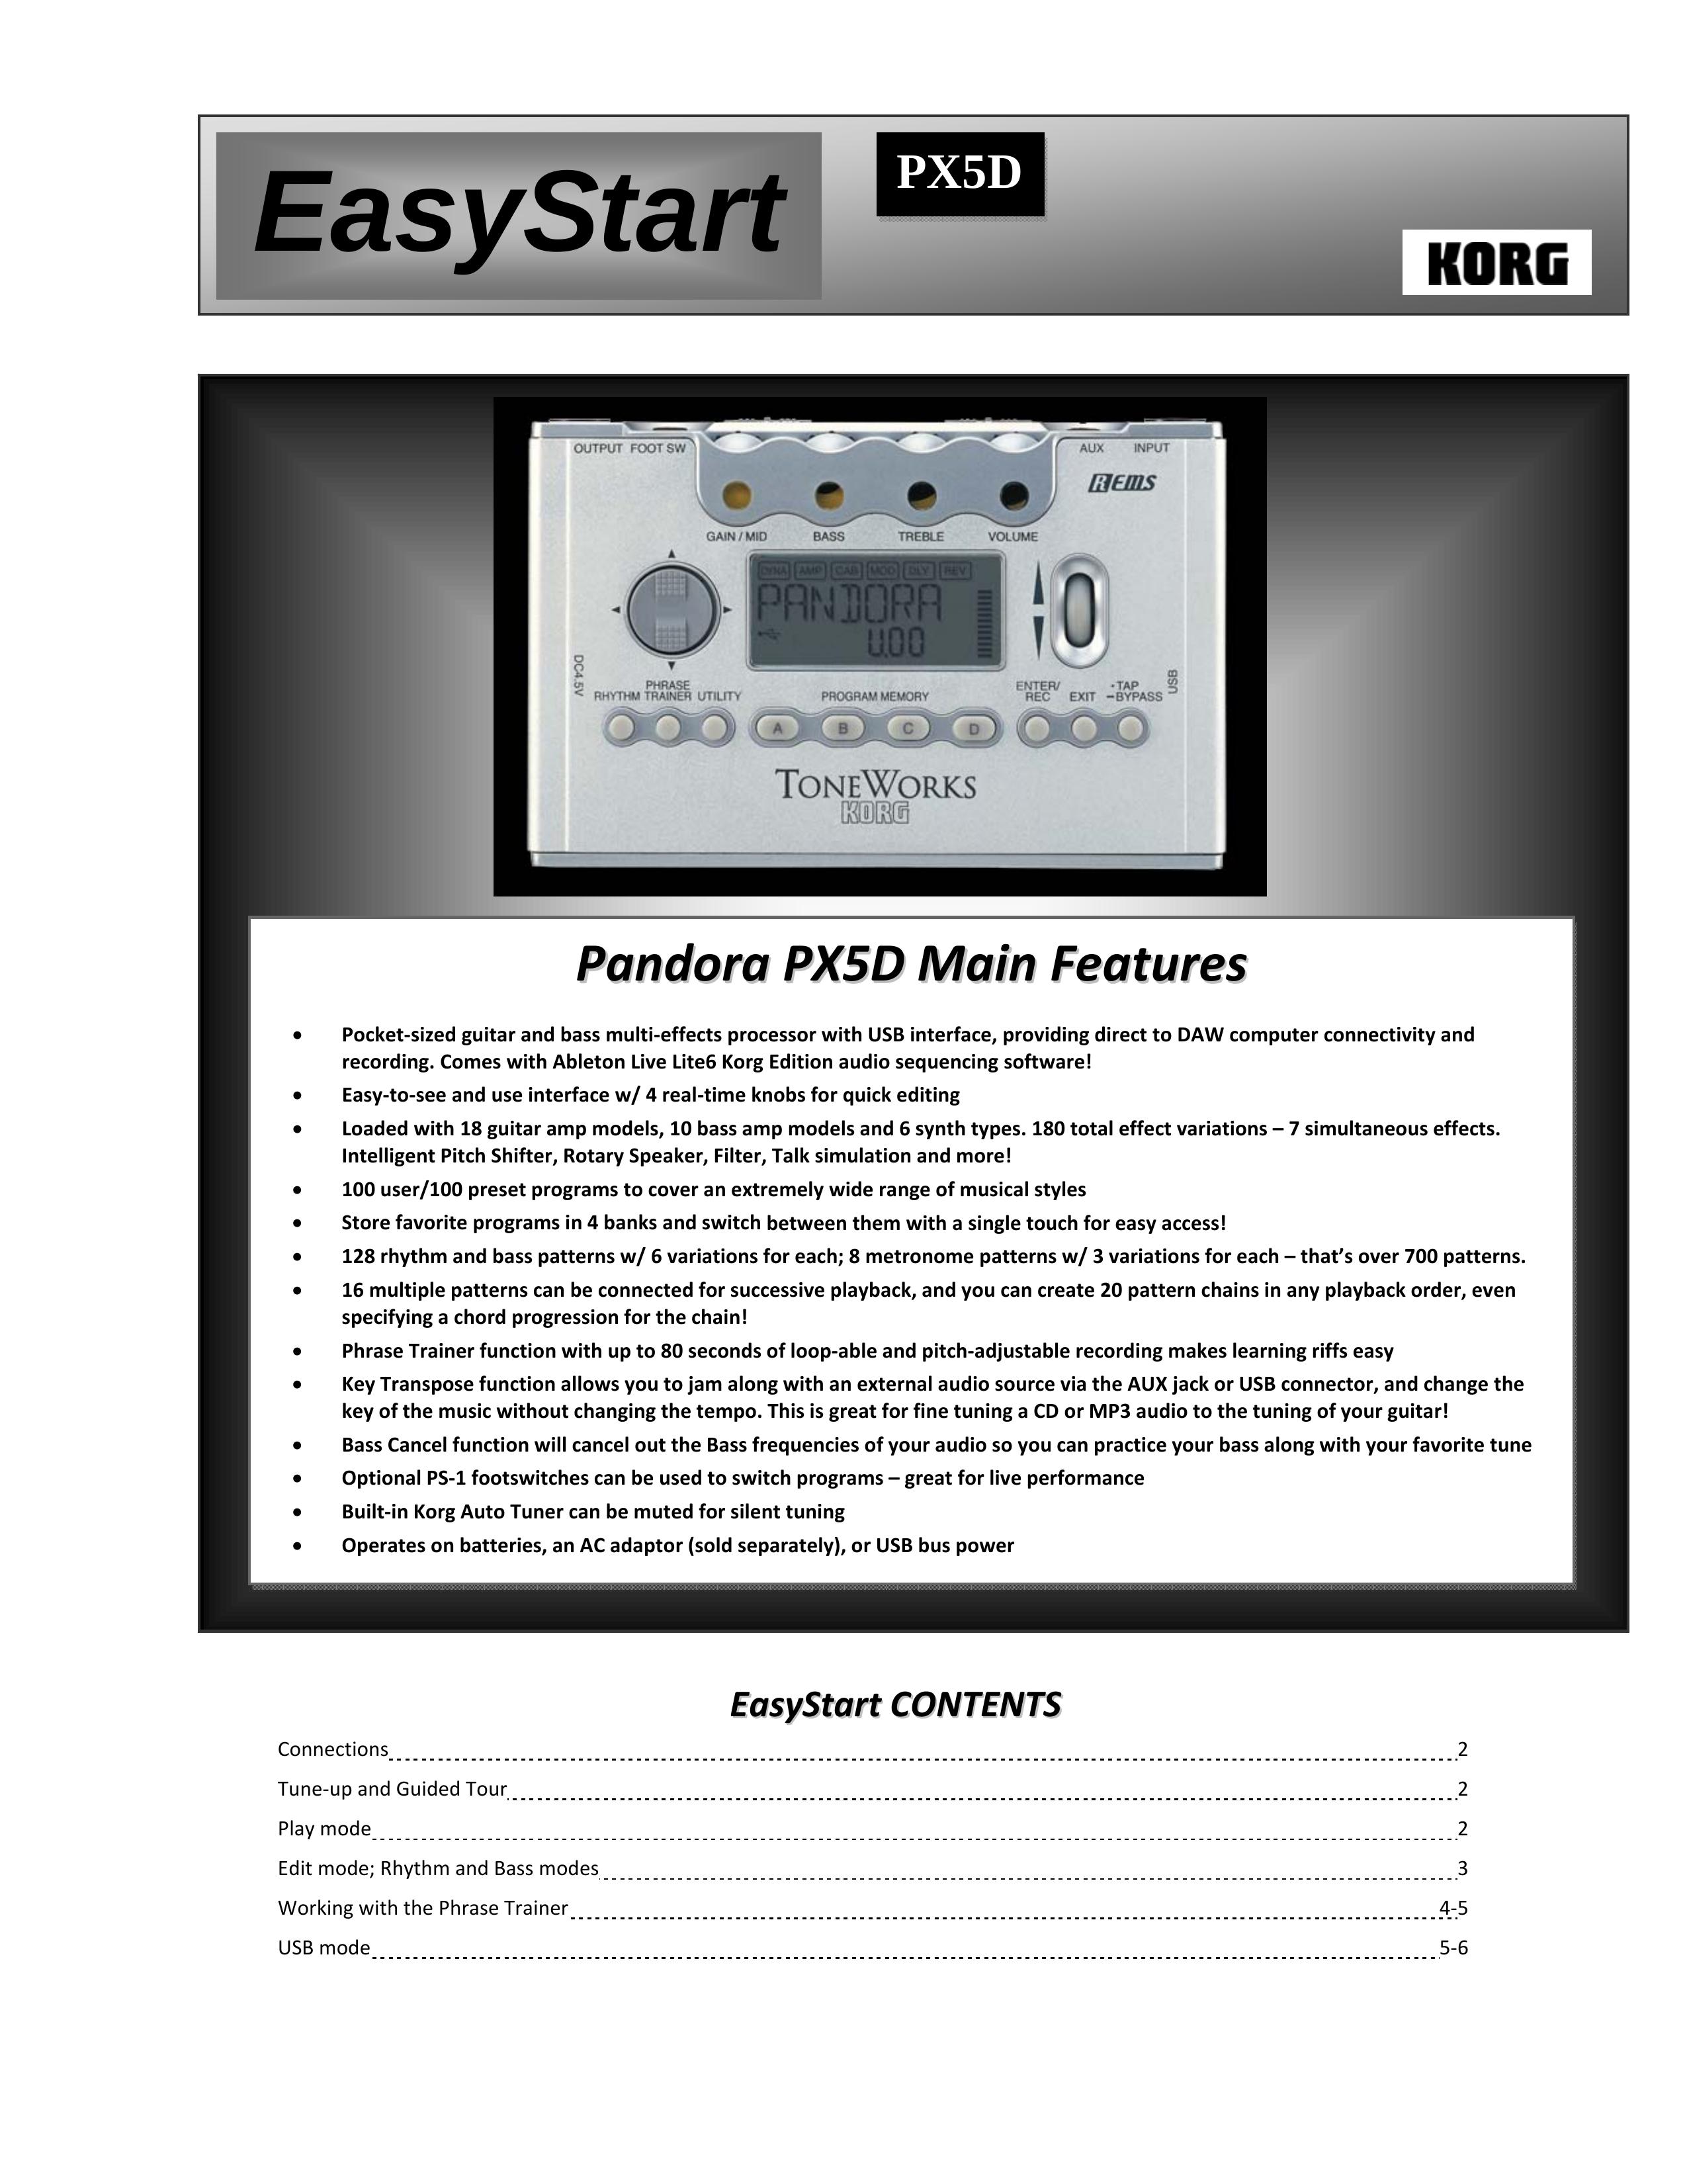 Korg PX5D Music Mixer User Manual